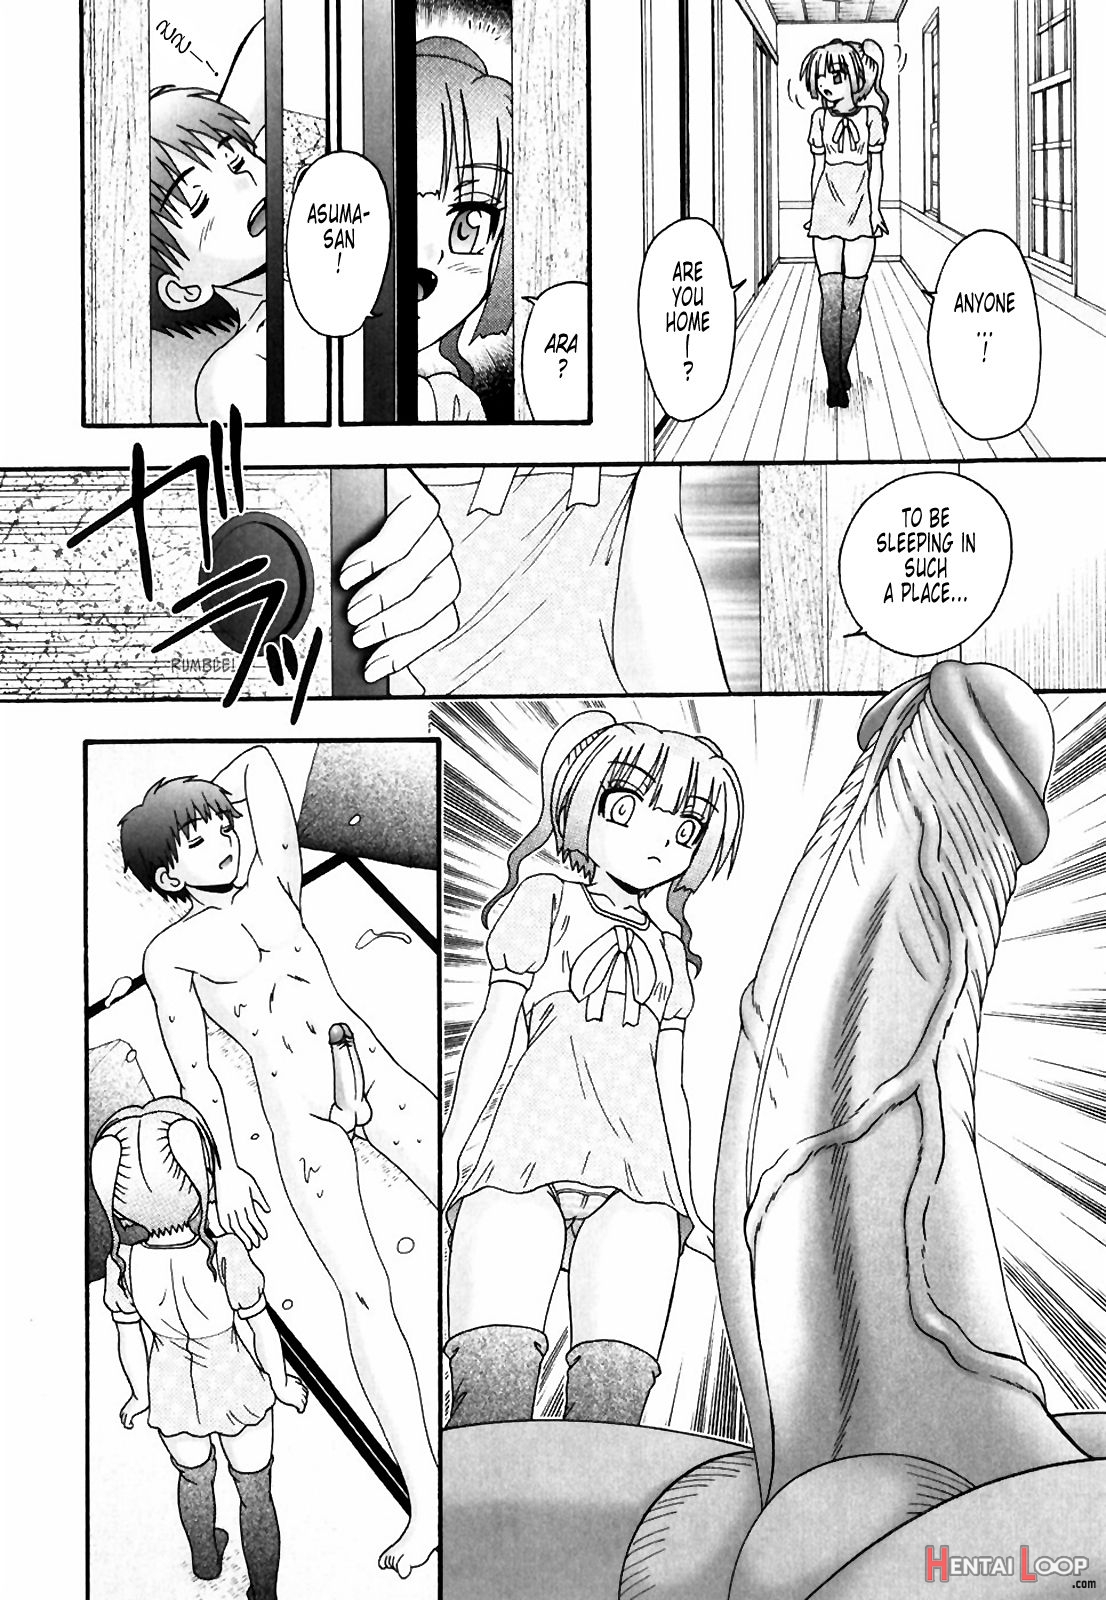 Tsukumimi 1&2 page 40